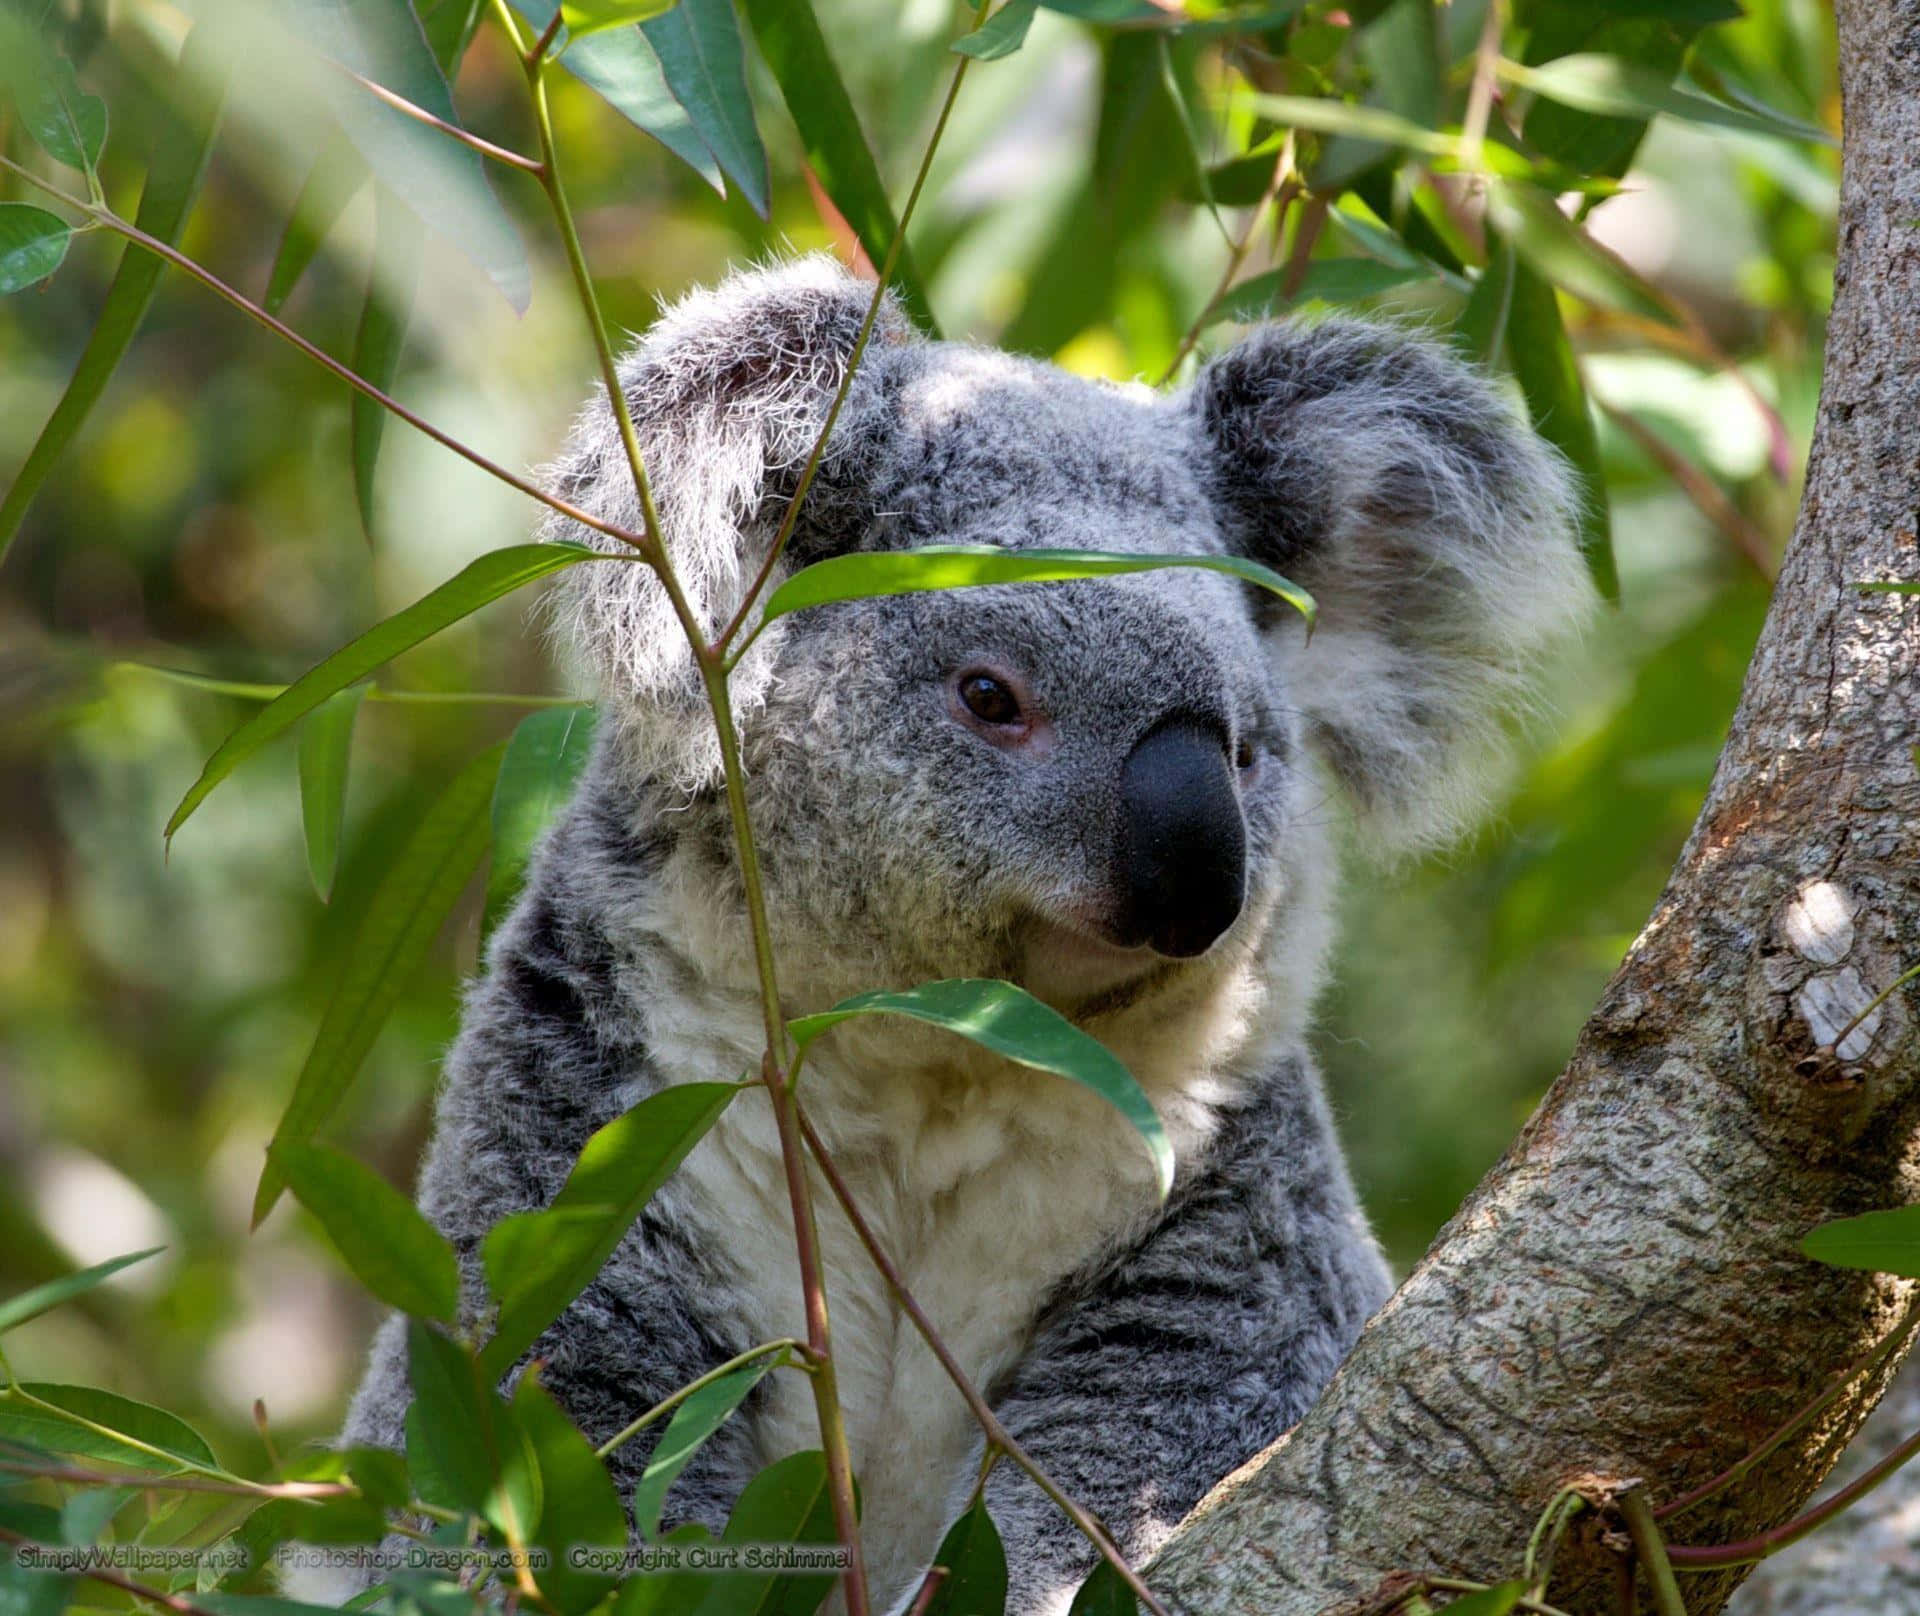 A Lazy Koala Enjoying The Day